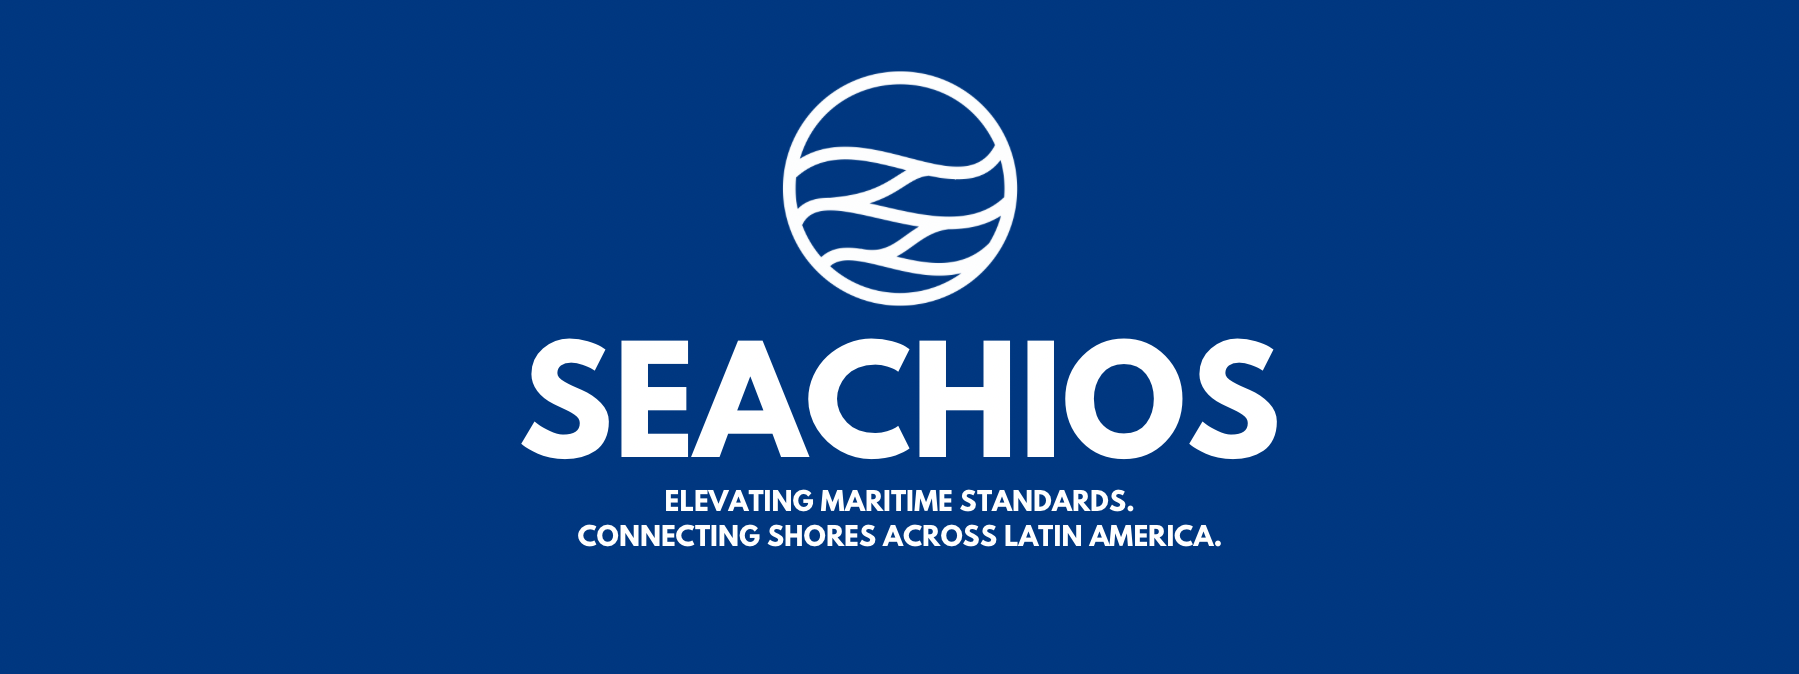 Seachios Marine Services